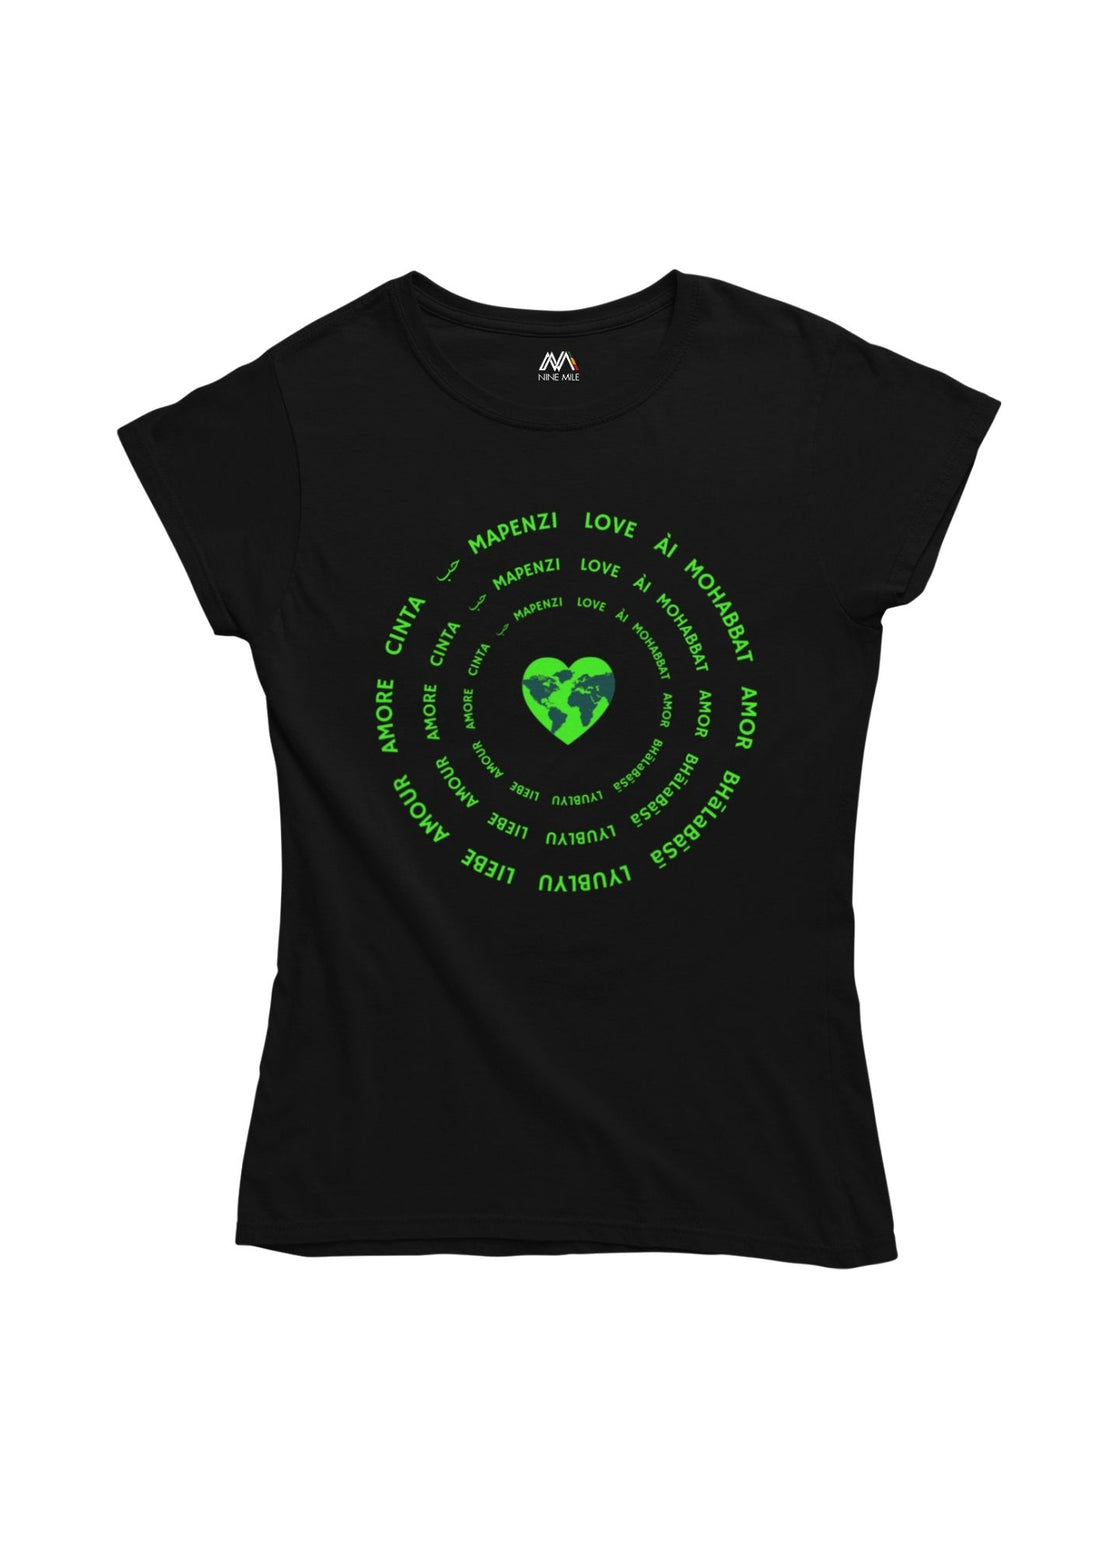 Speak Love T-Shirt - Nine Mile Clothing 